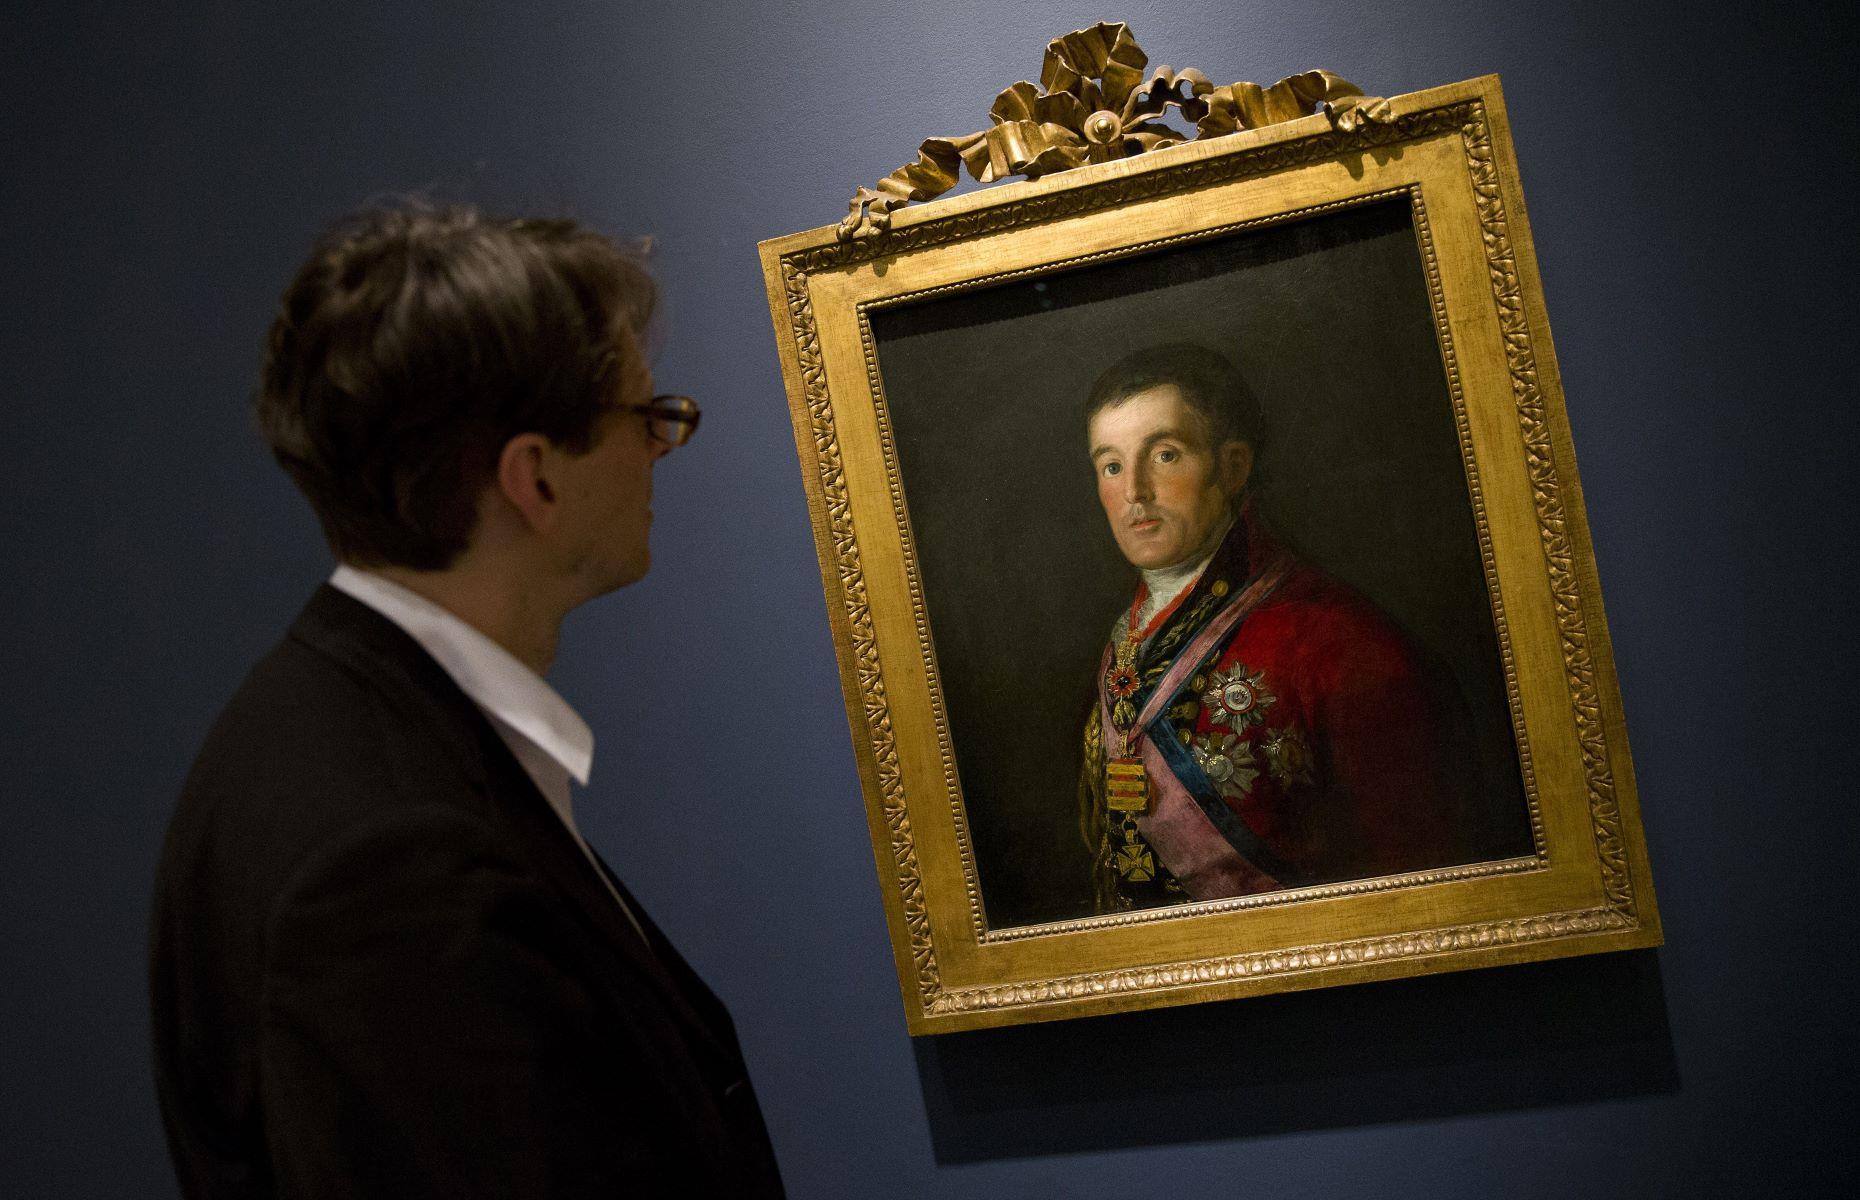 The Duke of Wellington by Francisco Goya